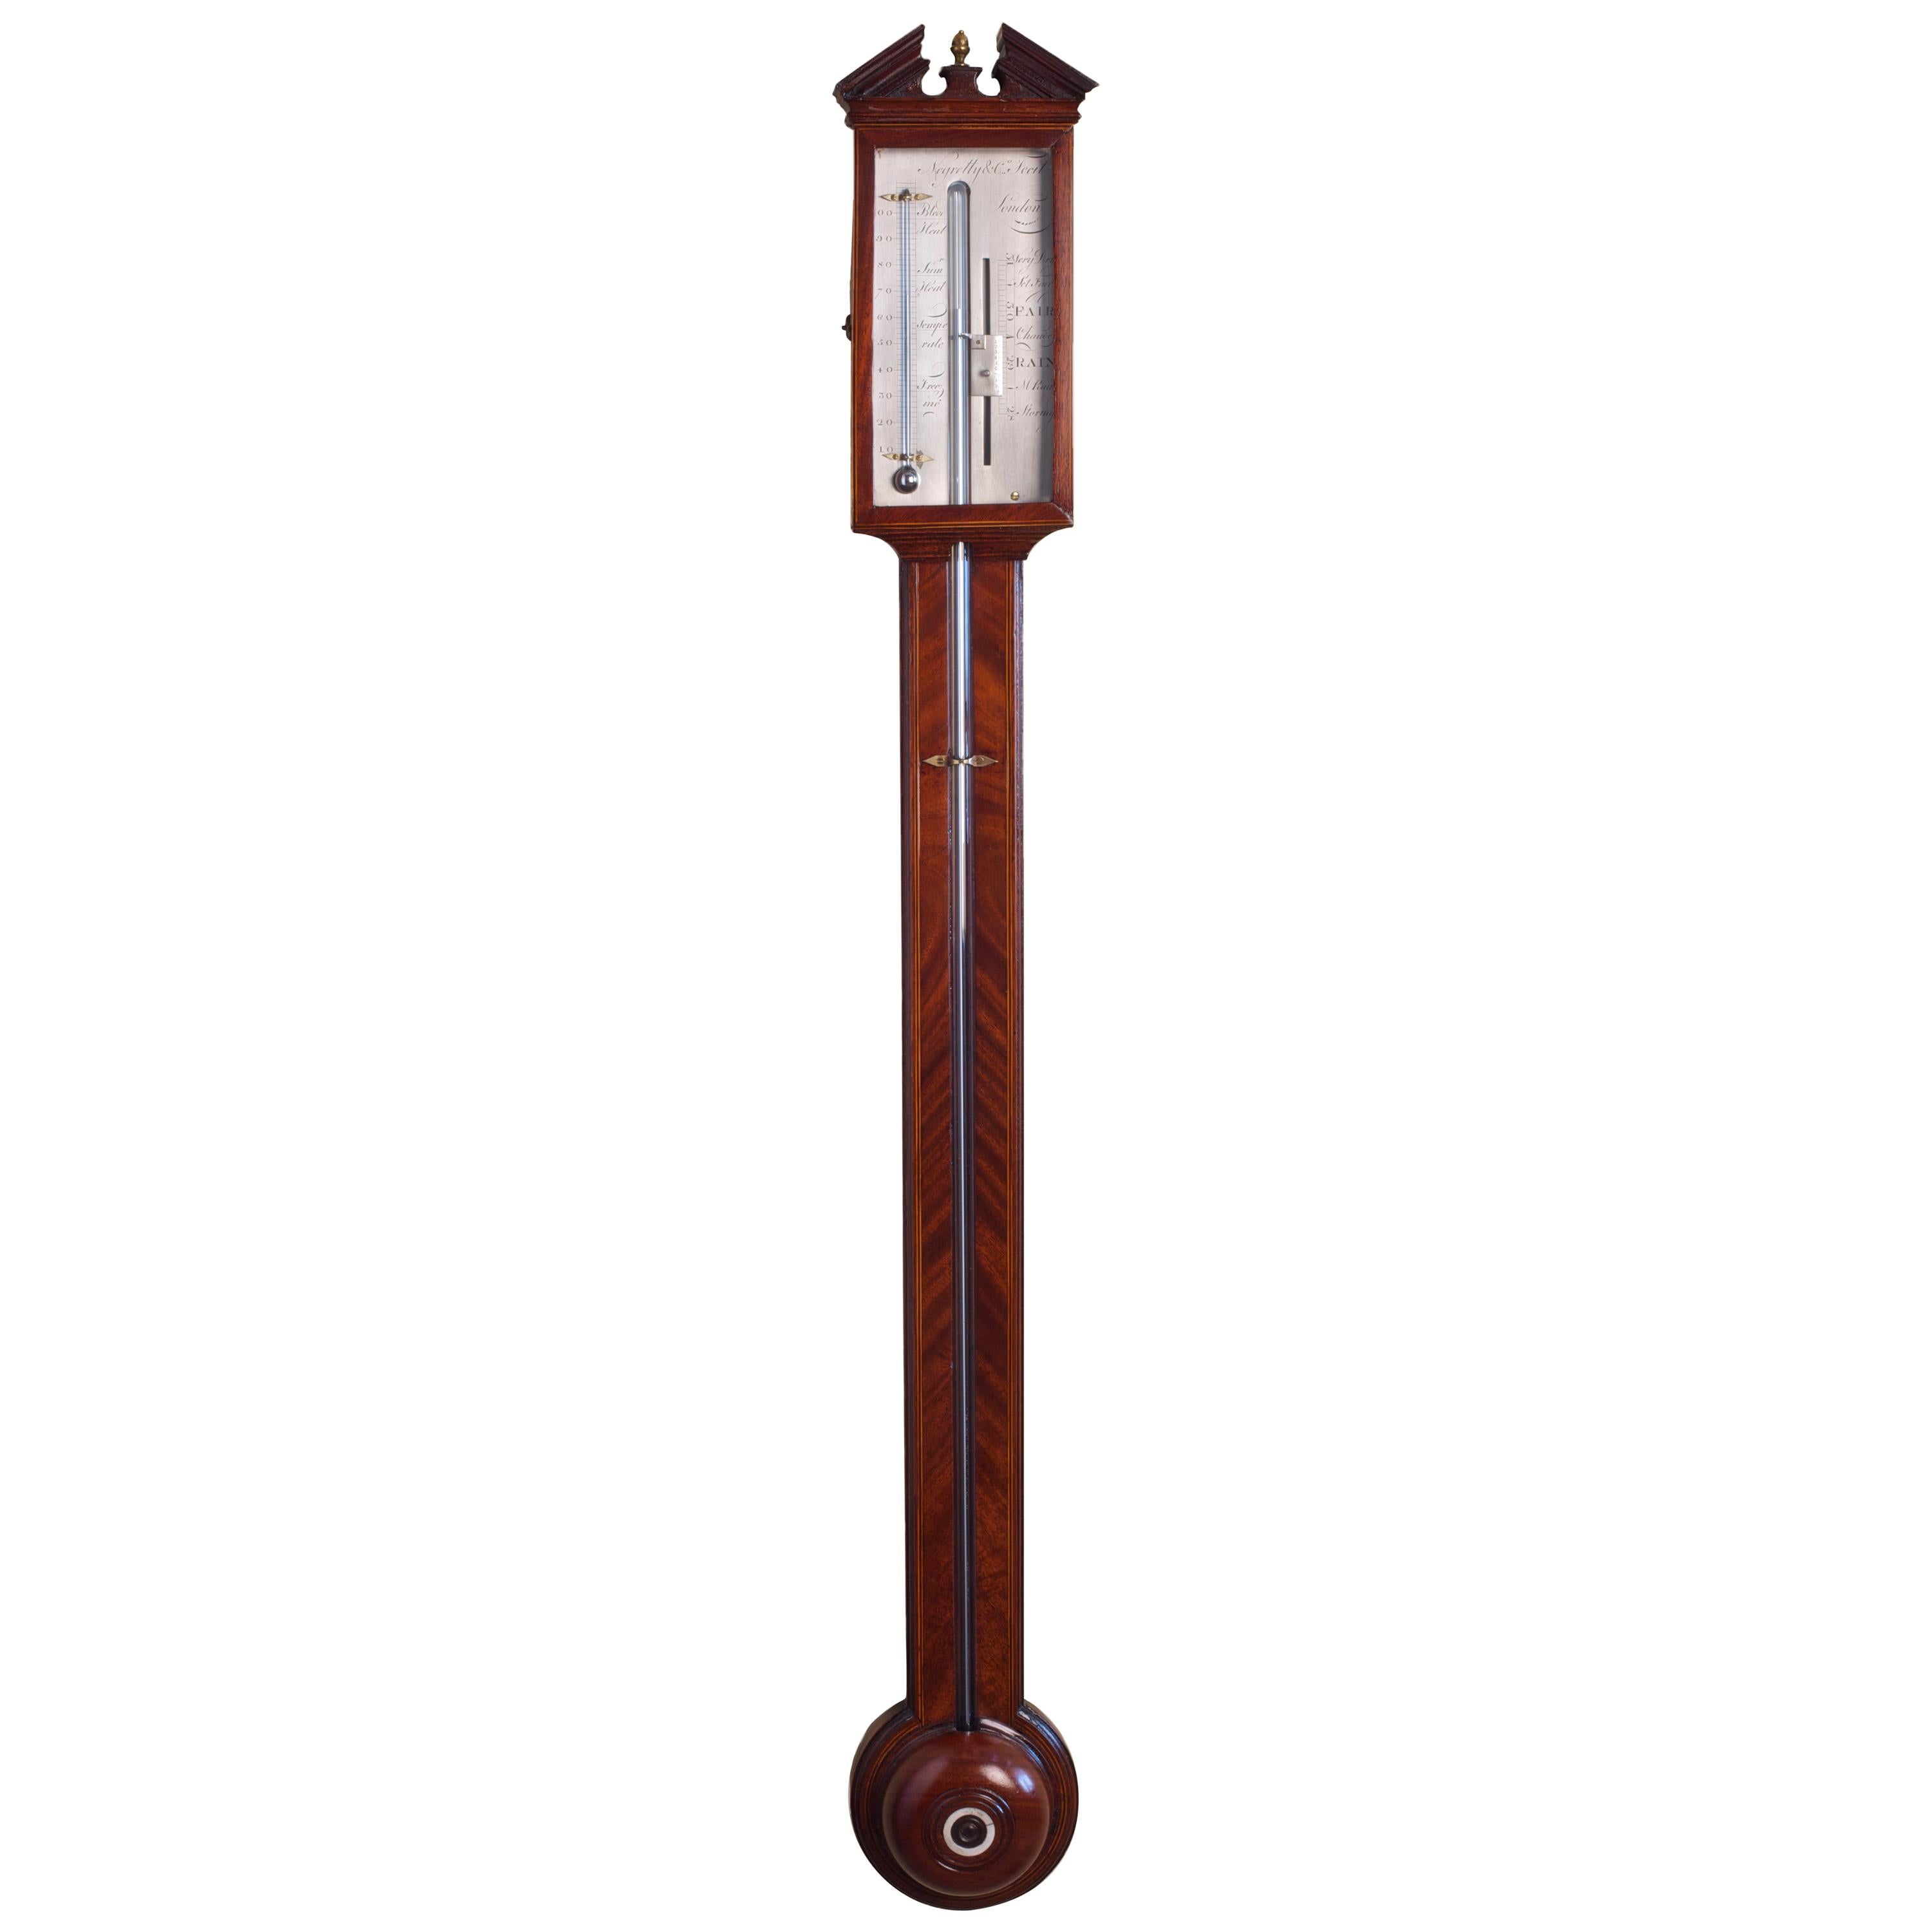 George III Stick Barometer by Negretty & Co, London